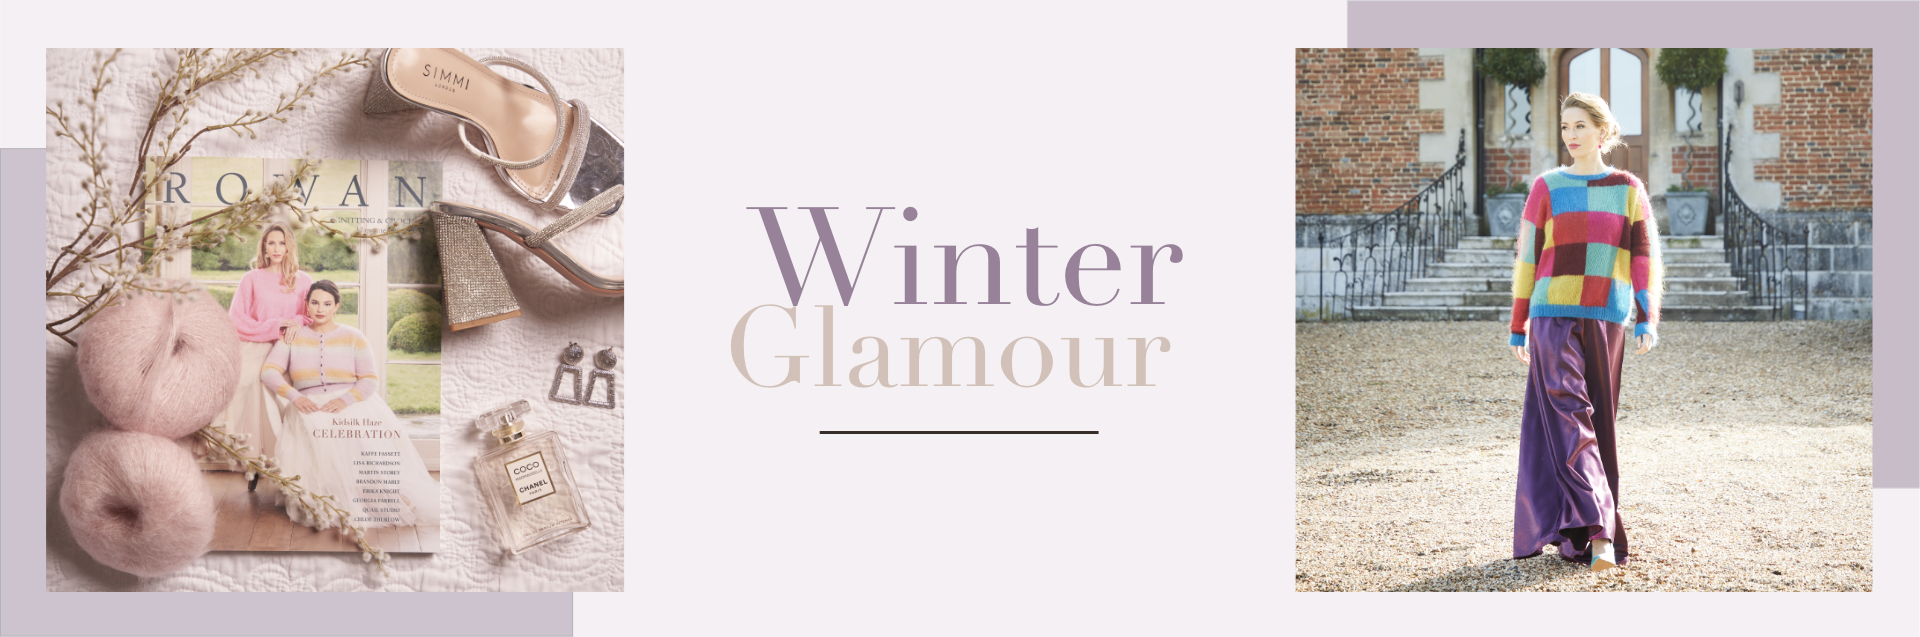 Winter Glamour banner